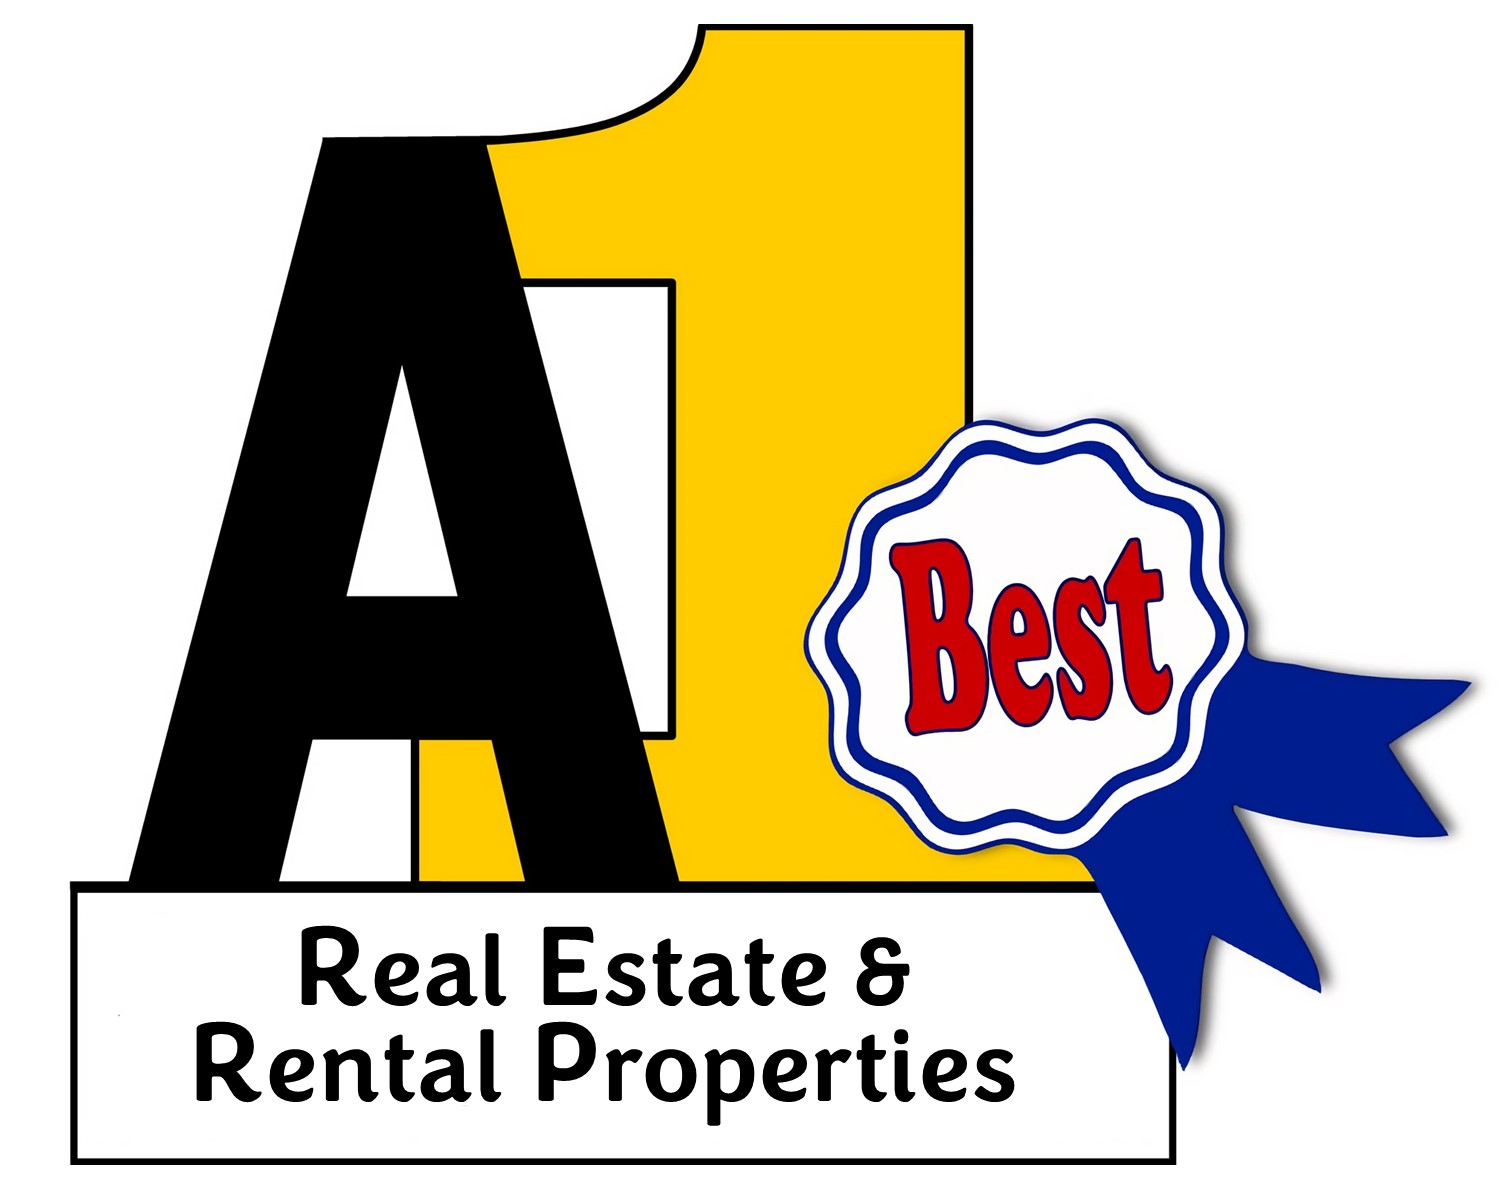 A1 Best Real Estate & Rental Properties